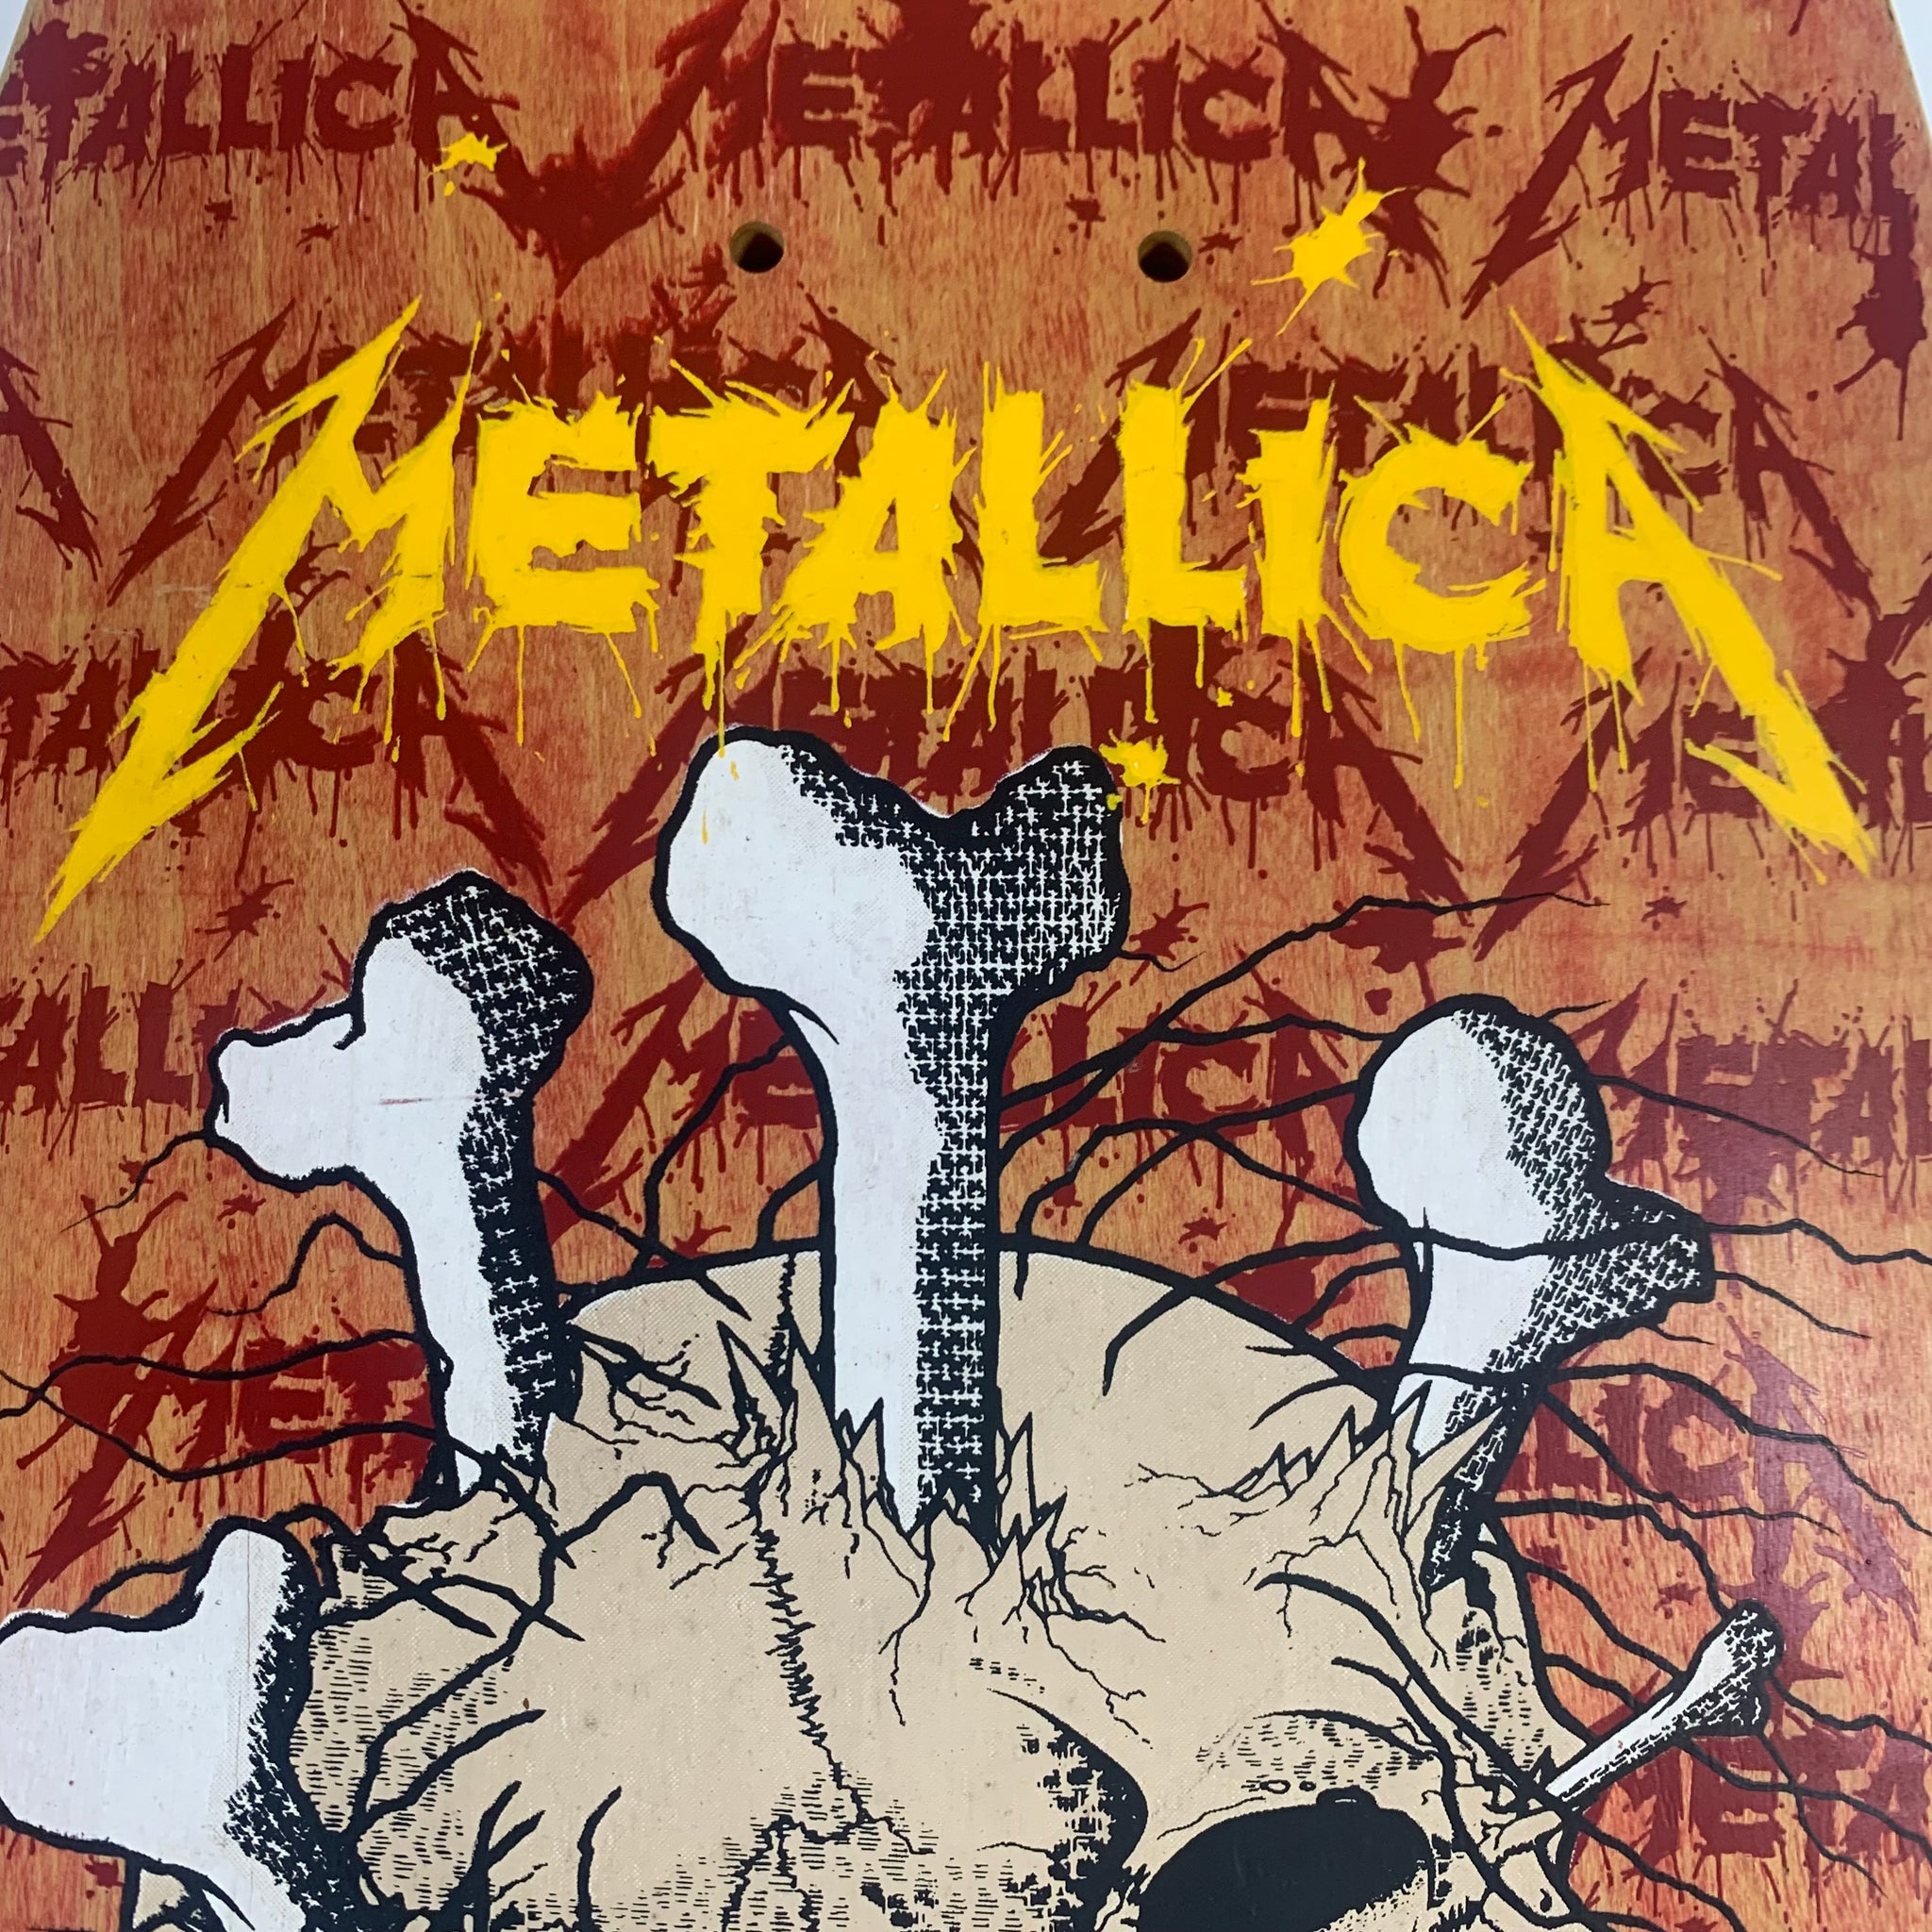 Vintage NOS Zorlac Metallica Pushead Skateboard Deck